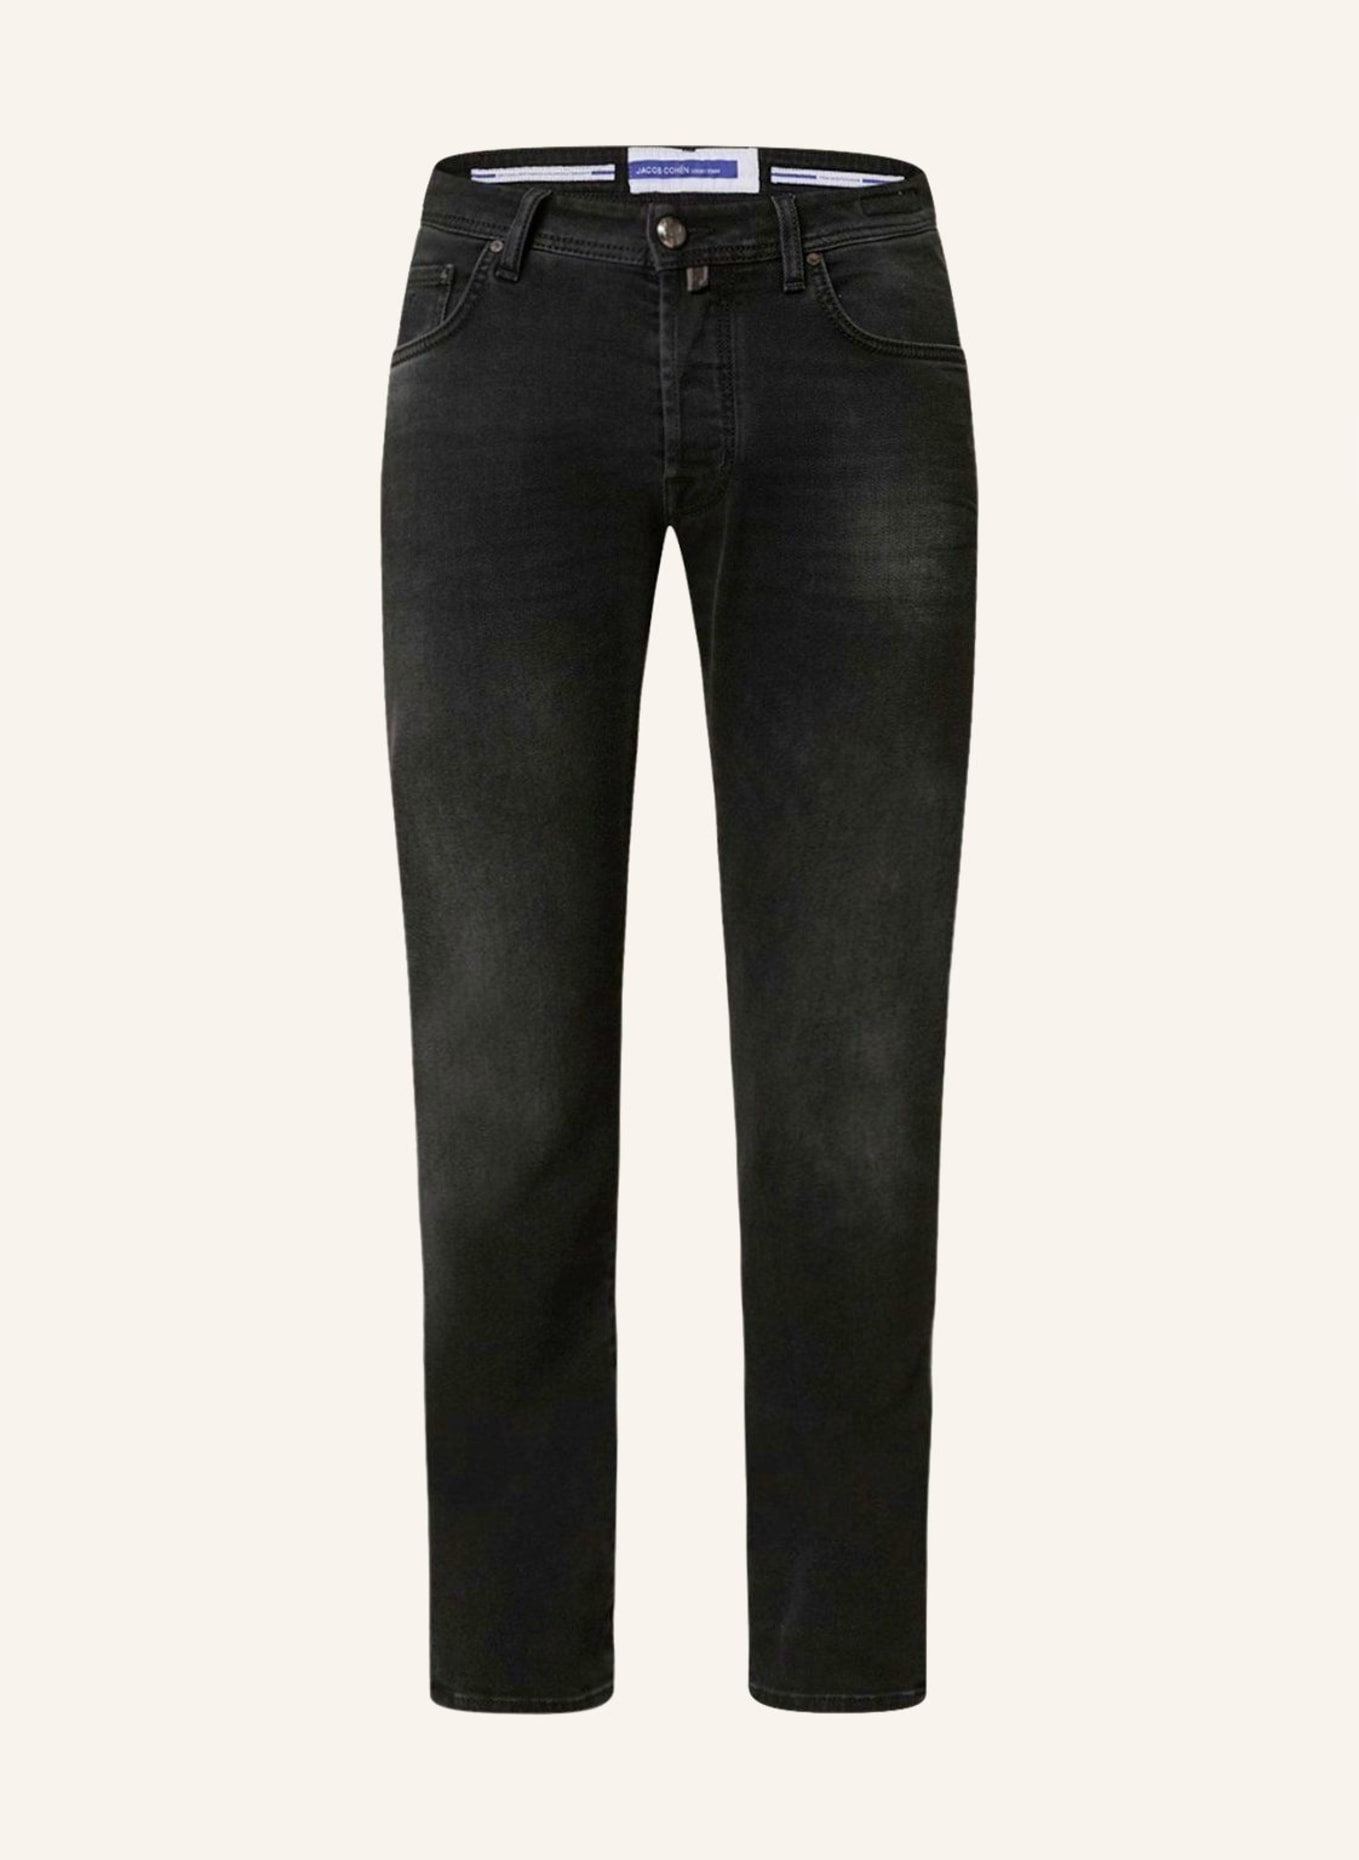 JACOB COHEN Jeans BARD Slim Fit , Farbe: 029D Black (Bild 1)